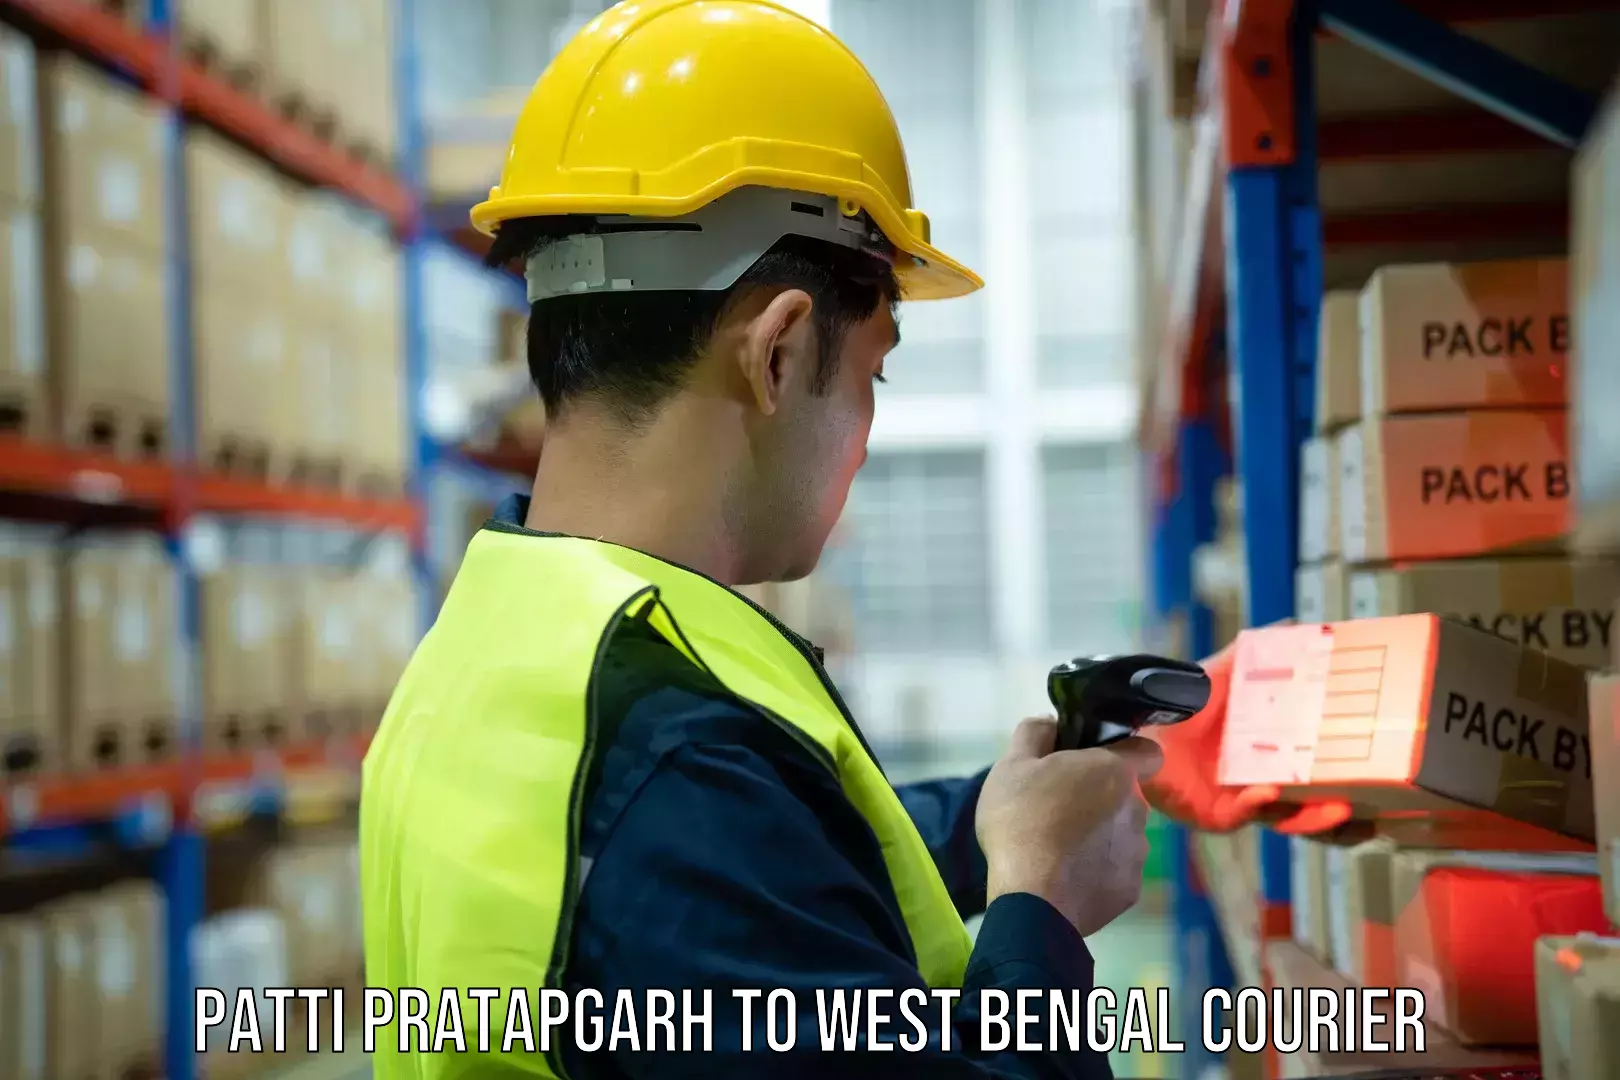 International courier networks Patti Pratapgarh to West Bengal